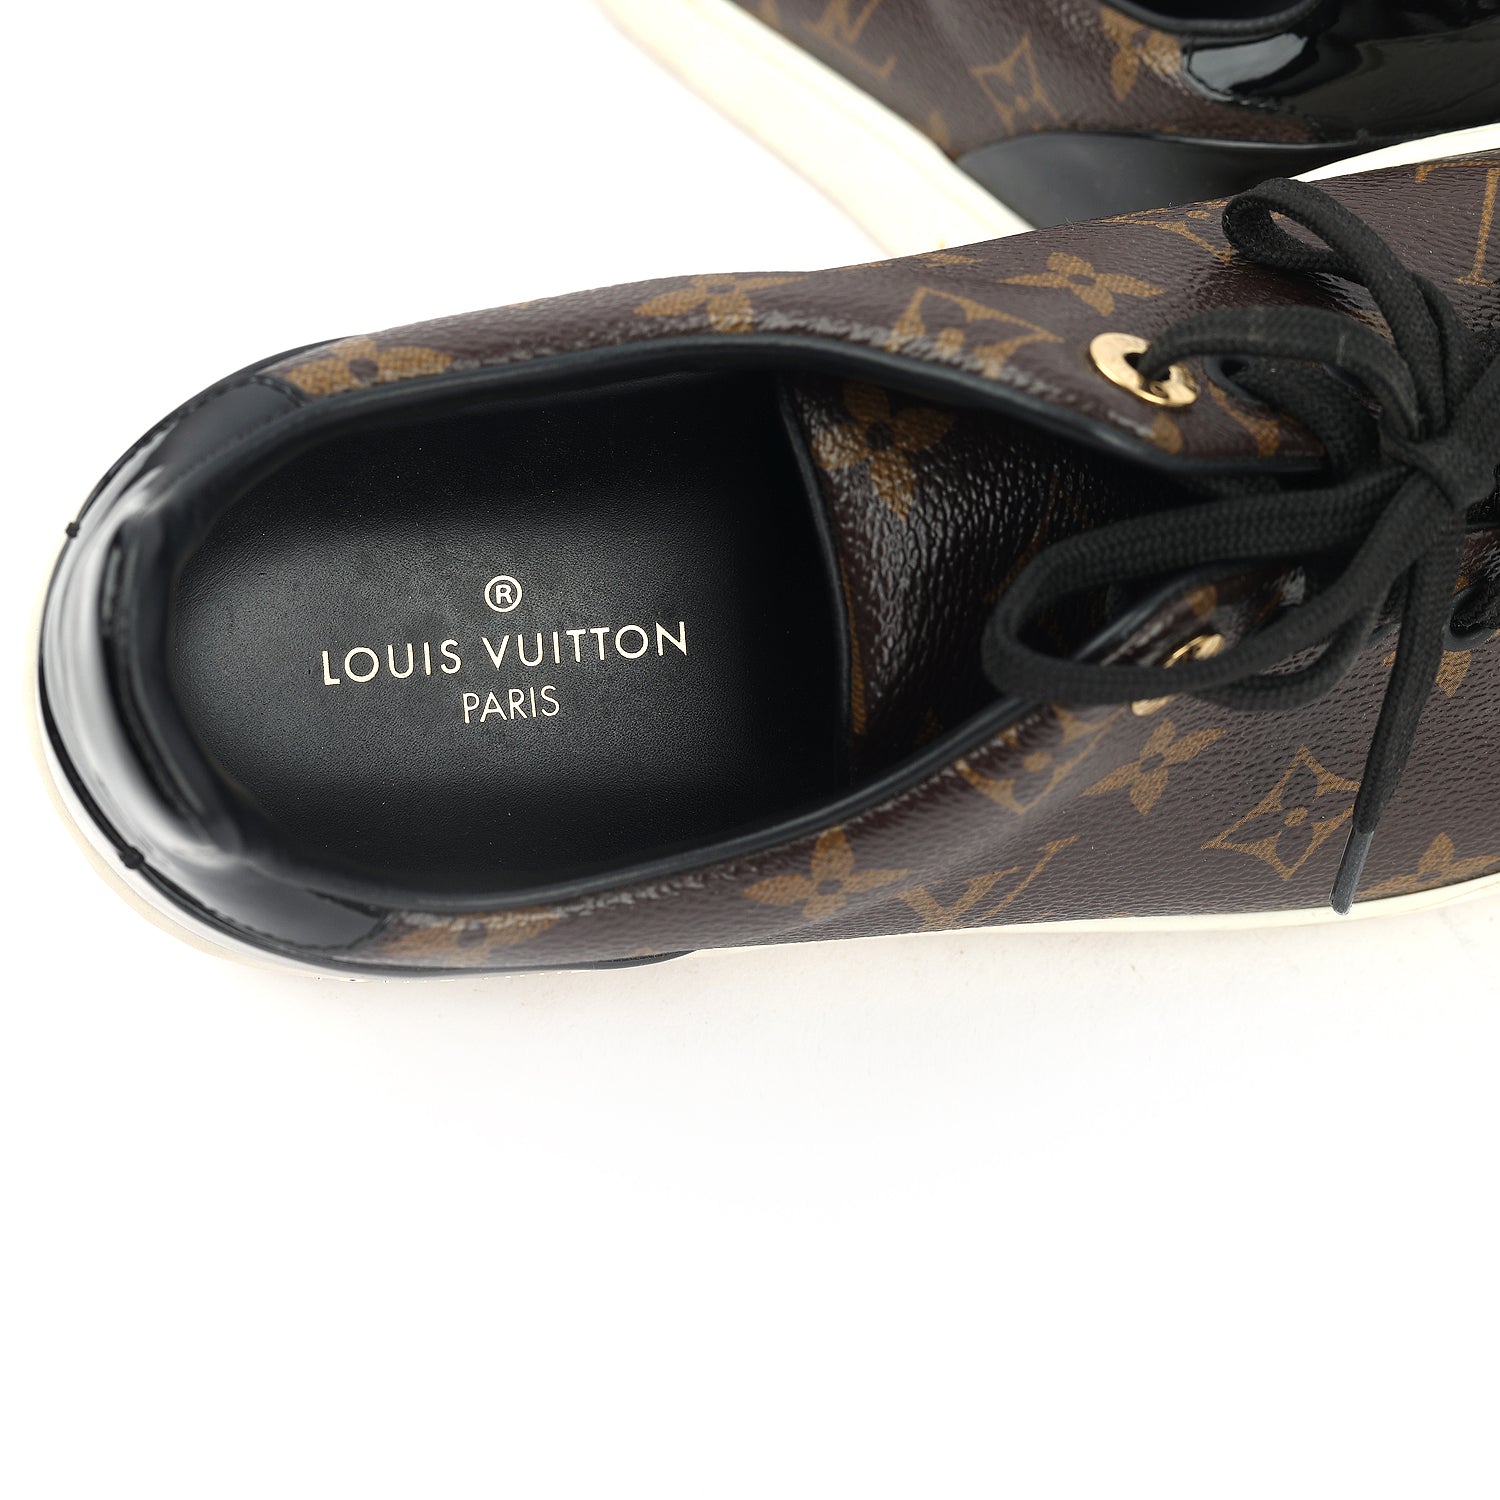 Louis Vuitton Monogram Canvas &amp; Patent Leather Sneakers EU-39